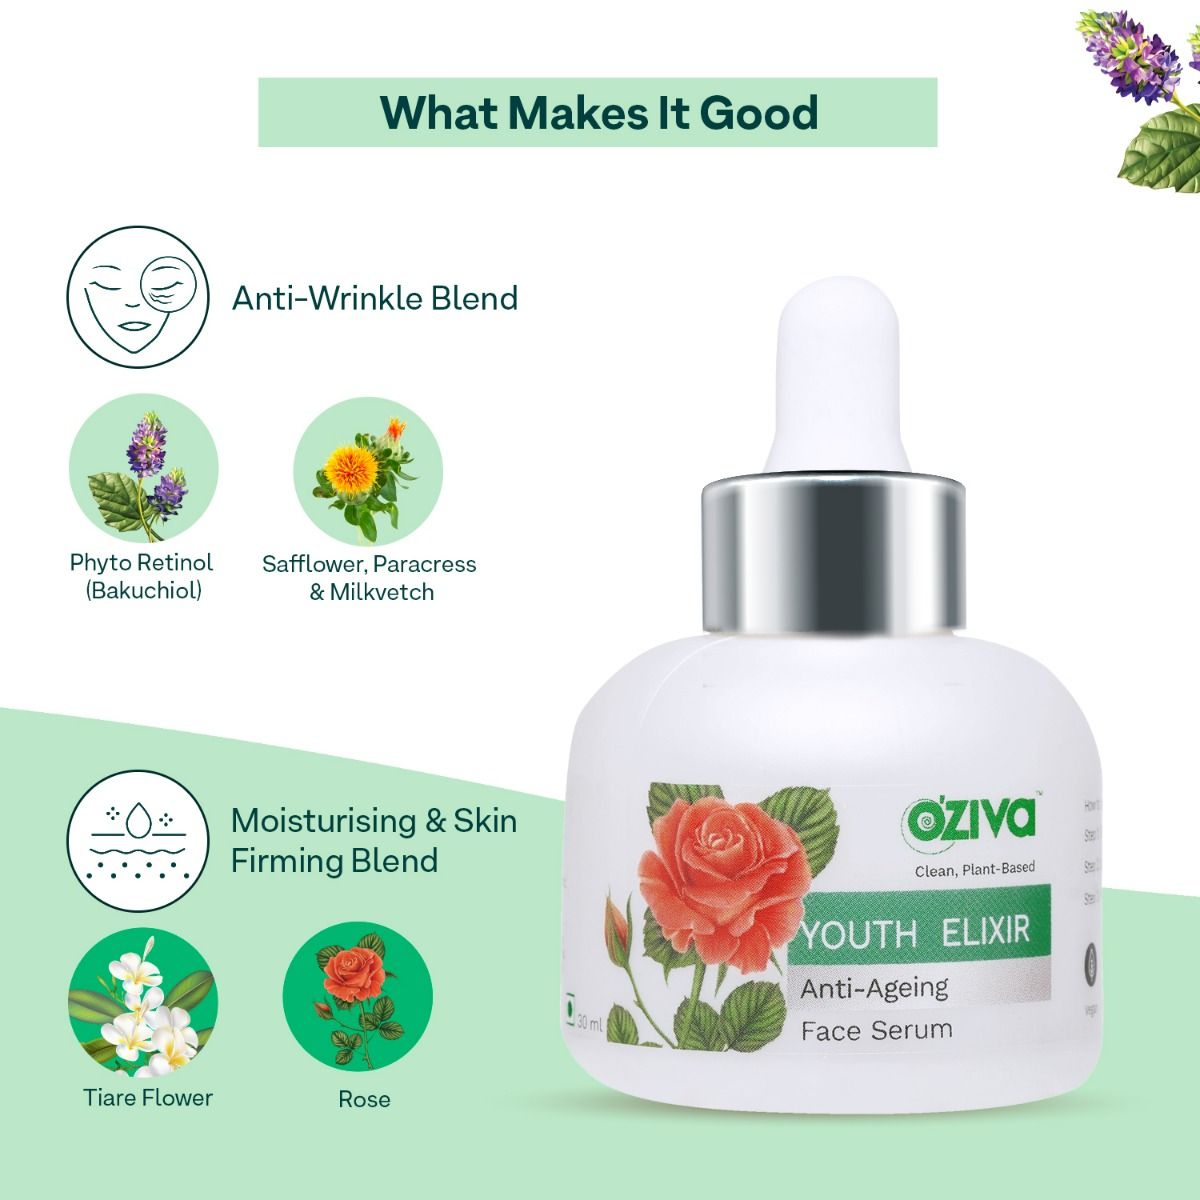 OZiva Youth Elixir Anti-Ageing Face serum, 30 ml, Pack of 1 